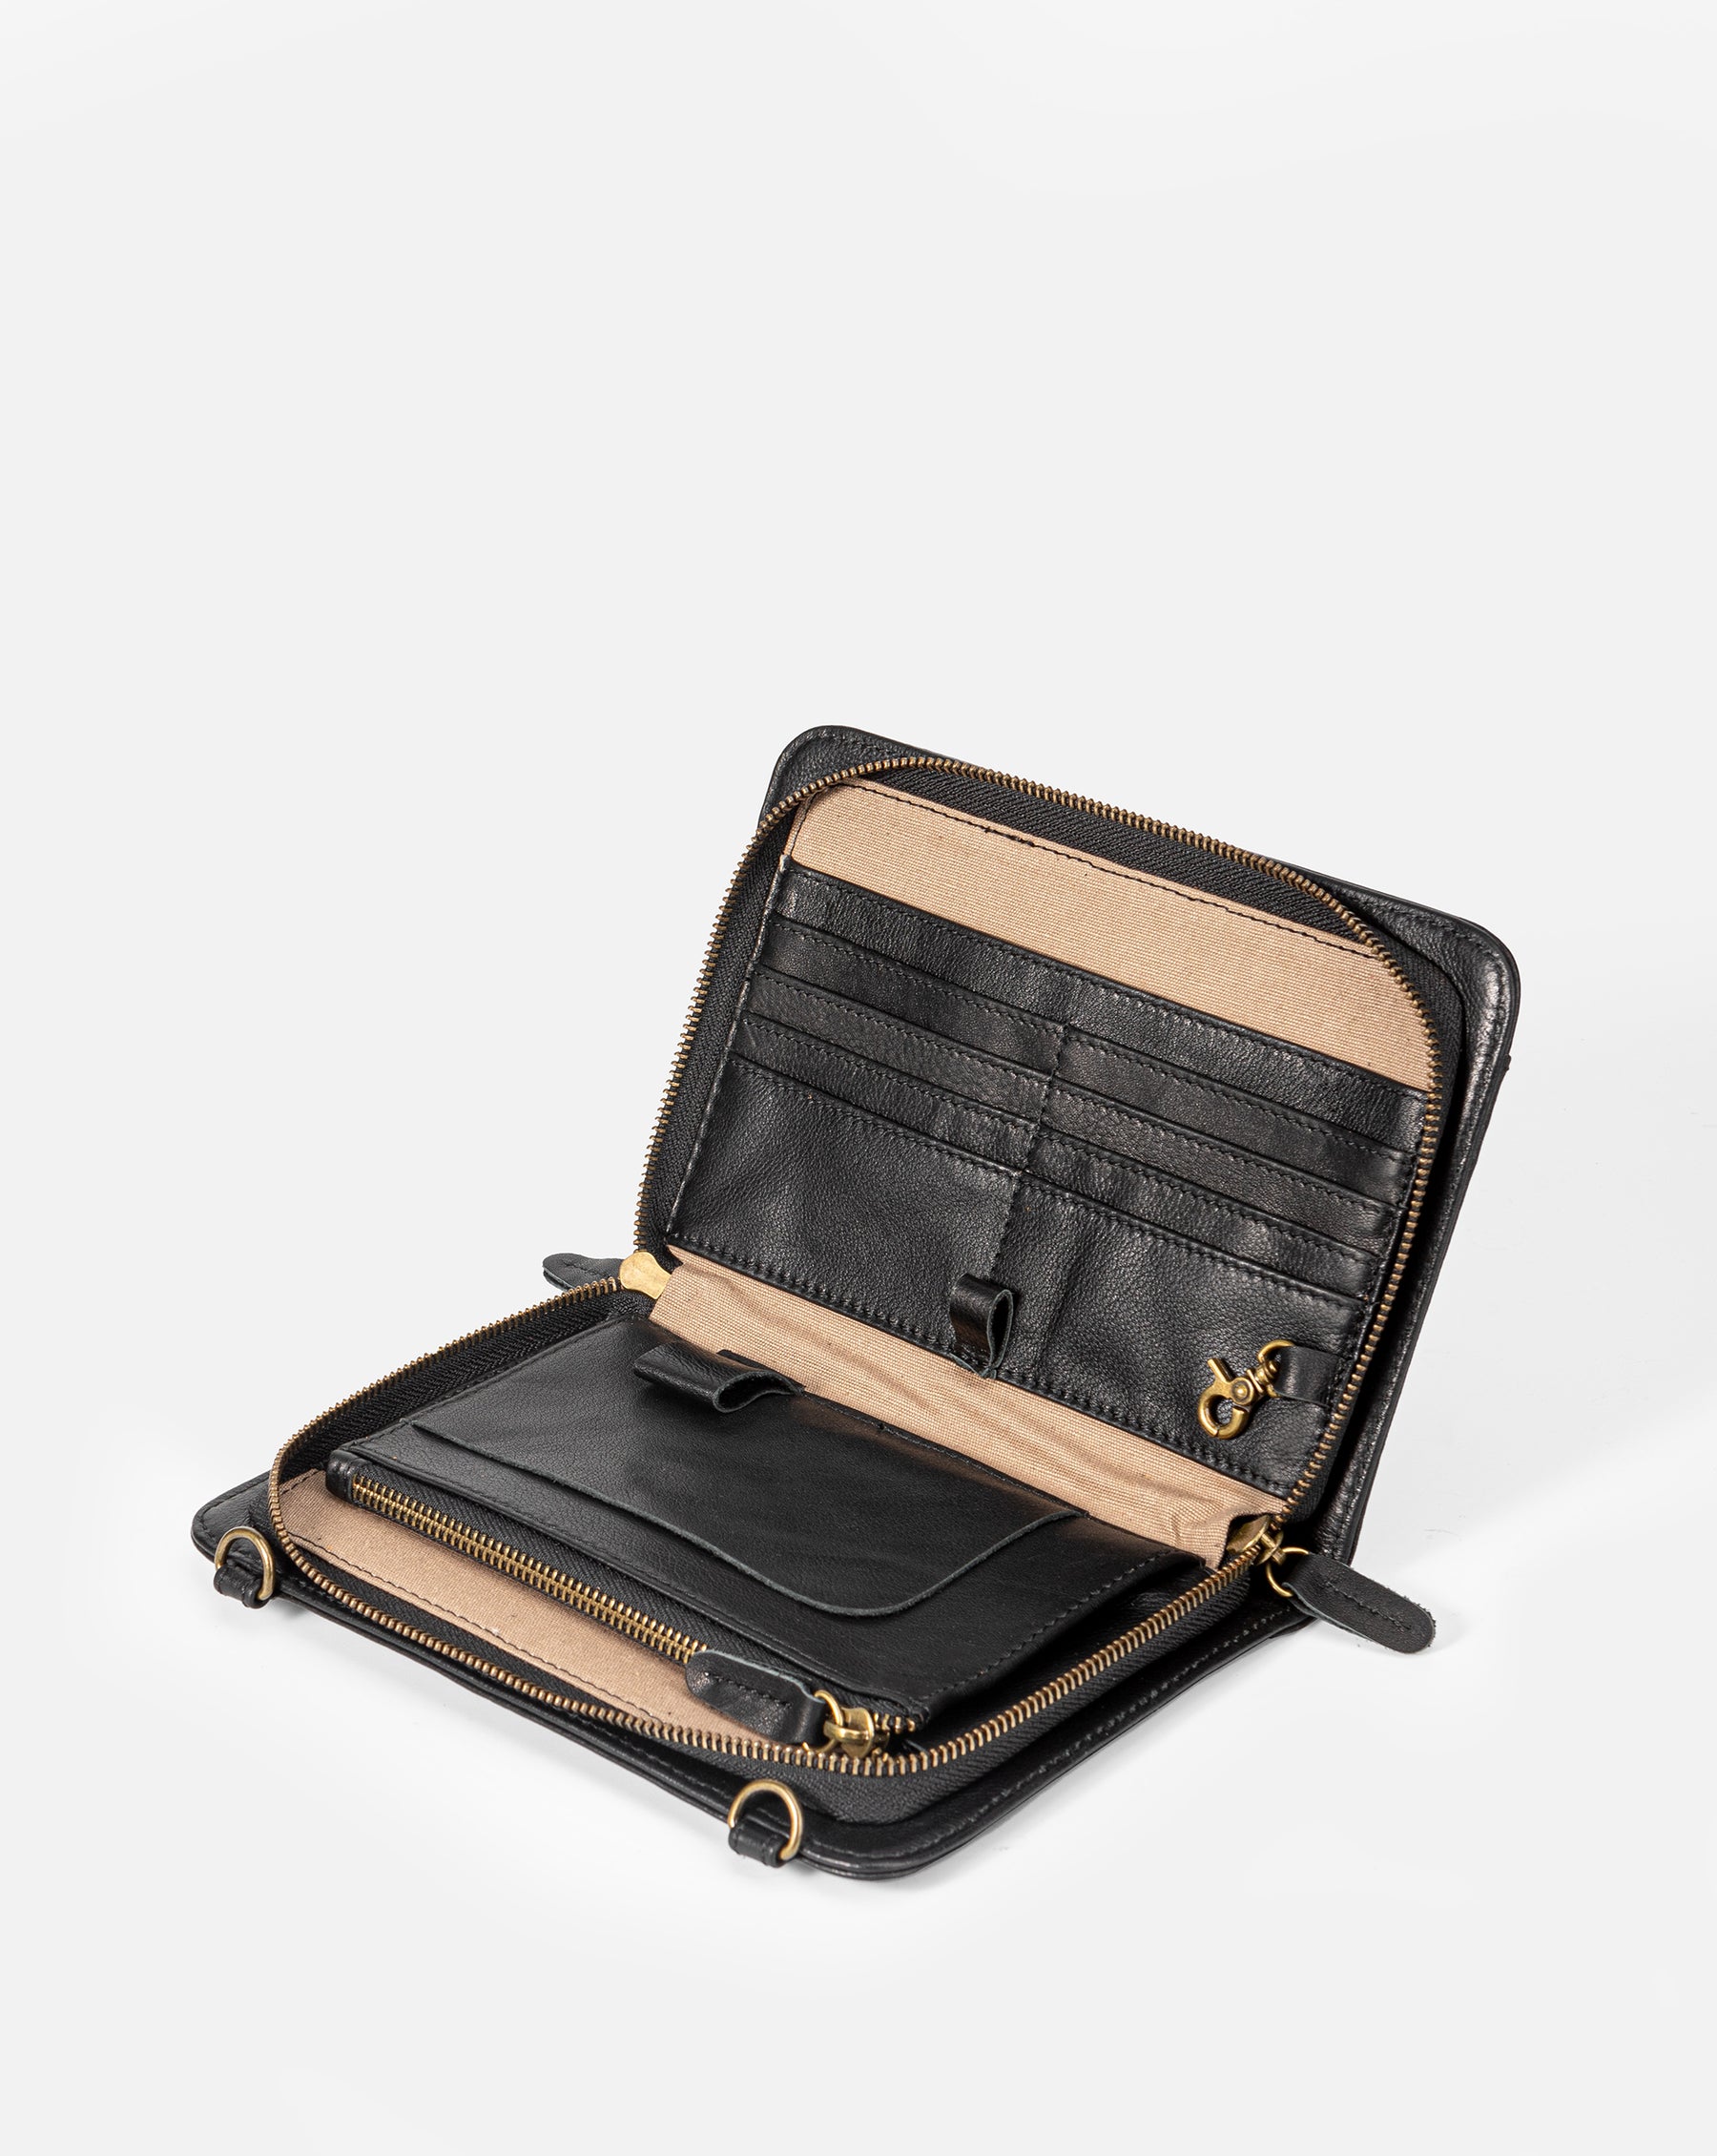 Bali Leather Crossbody Wallet Handbag Purse